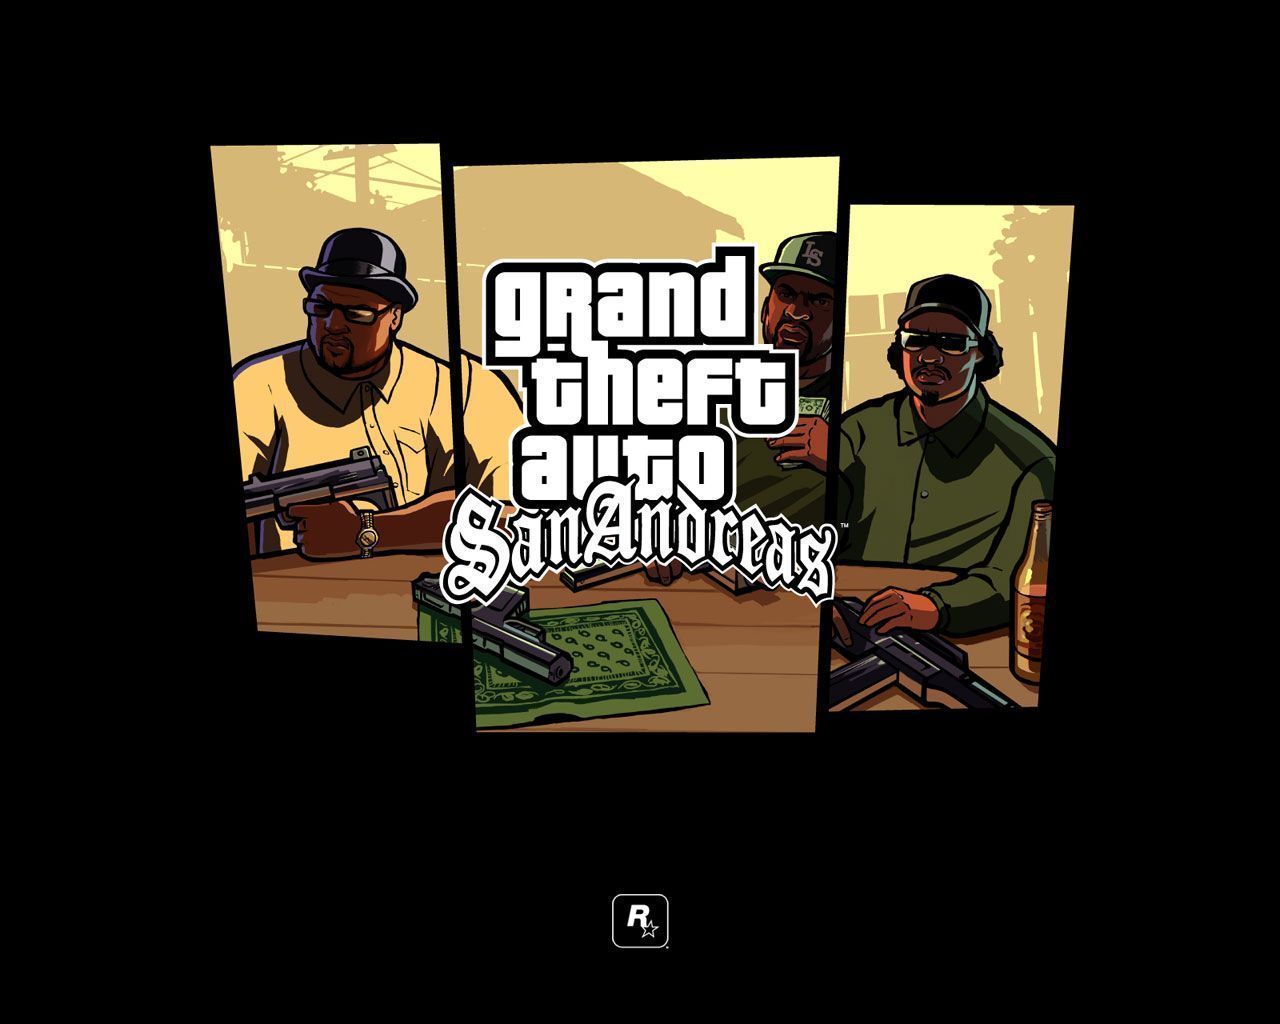 Grand Theft Auto: San Andreas - Official Desktops